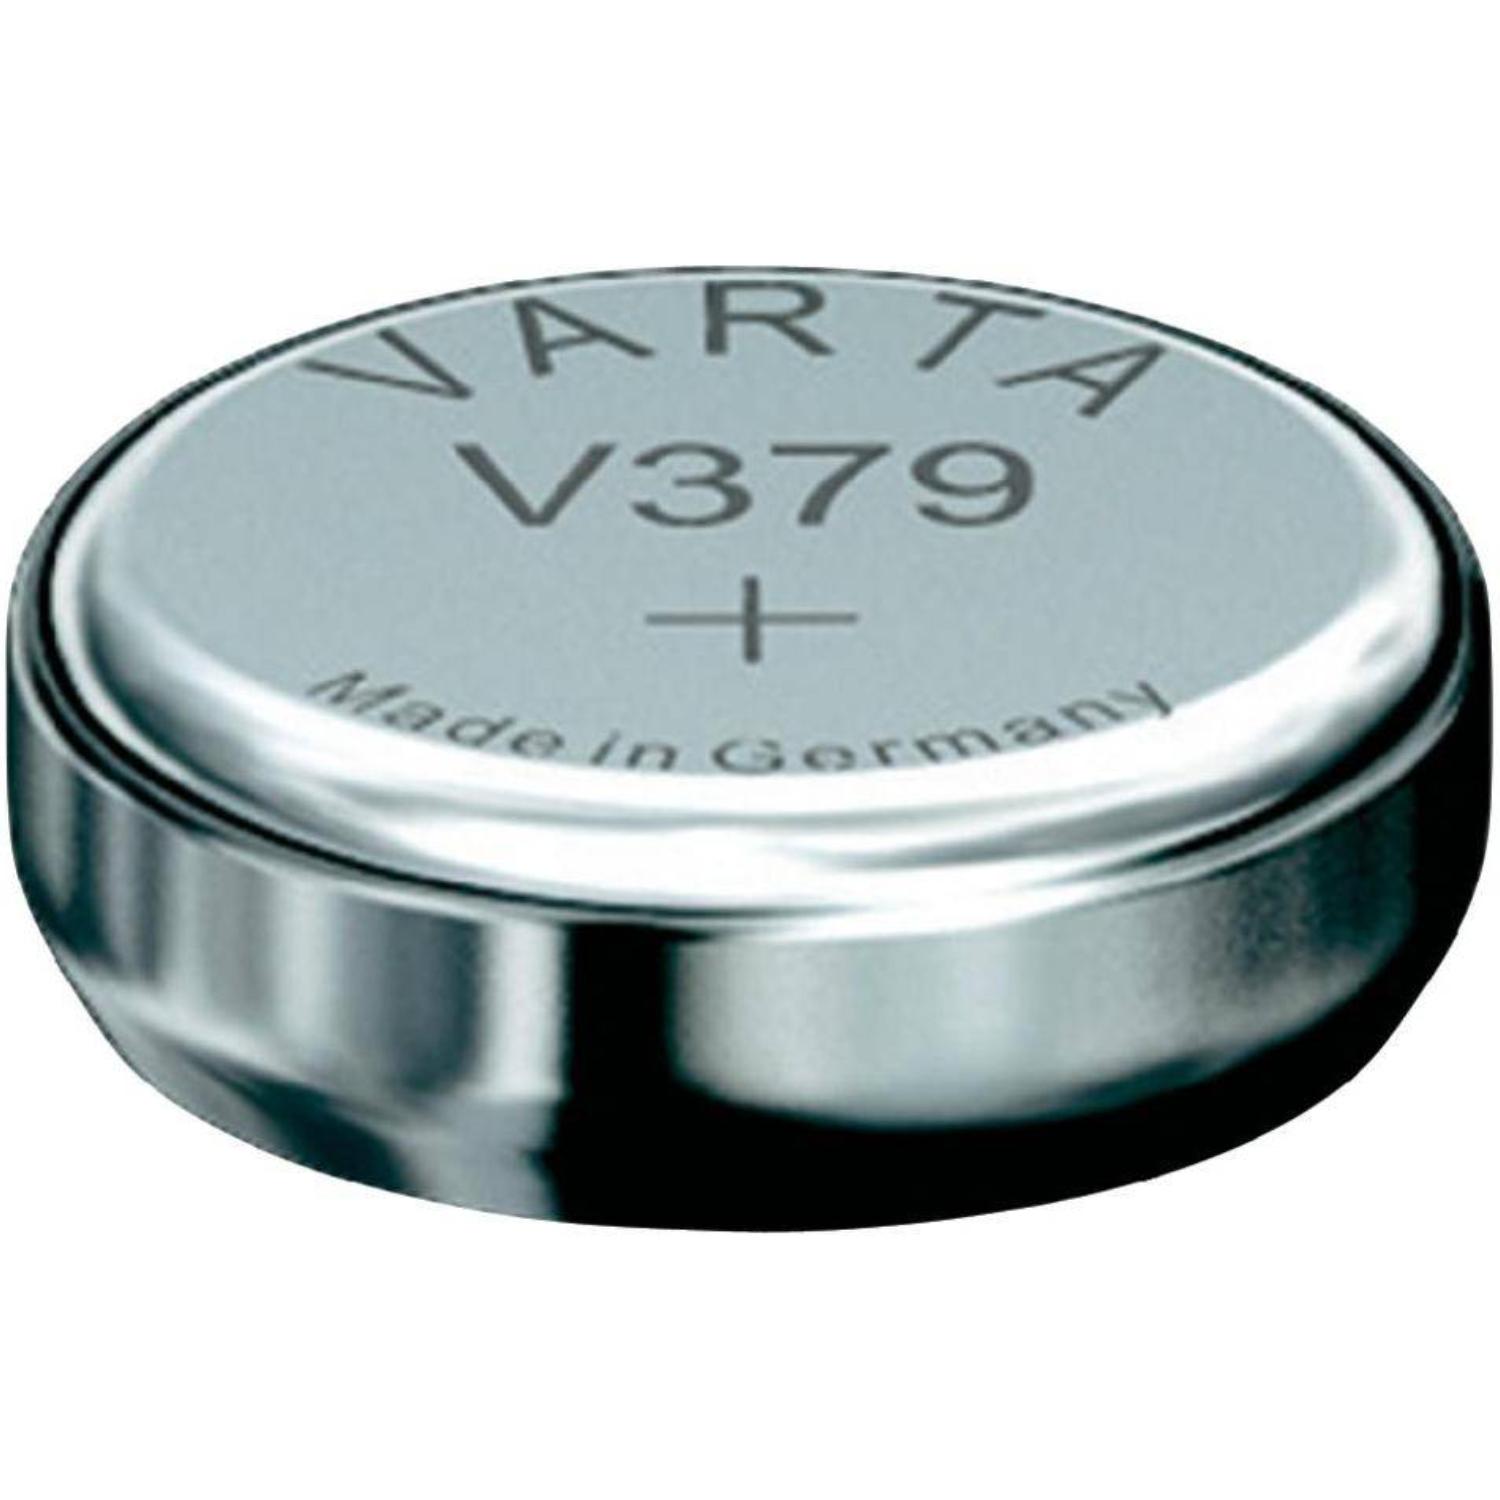 Image of Horlogebatterij 1.55v-12mah Sr521 379.801.111 (1st/bl)